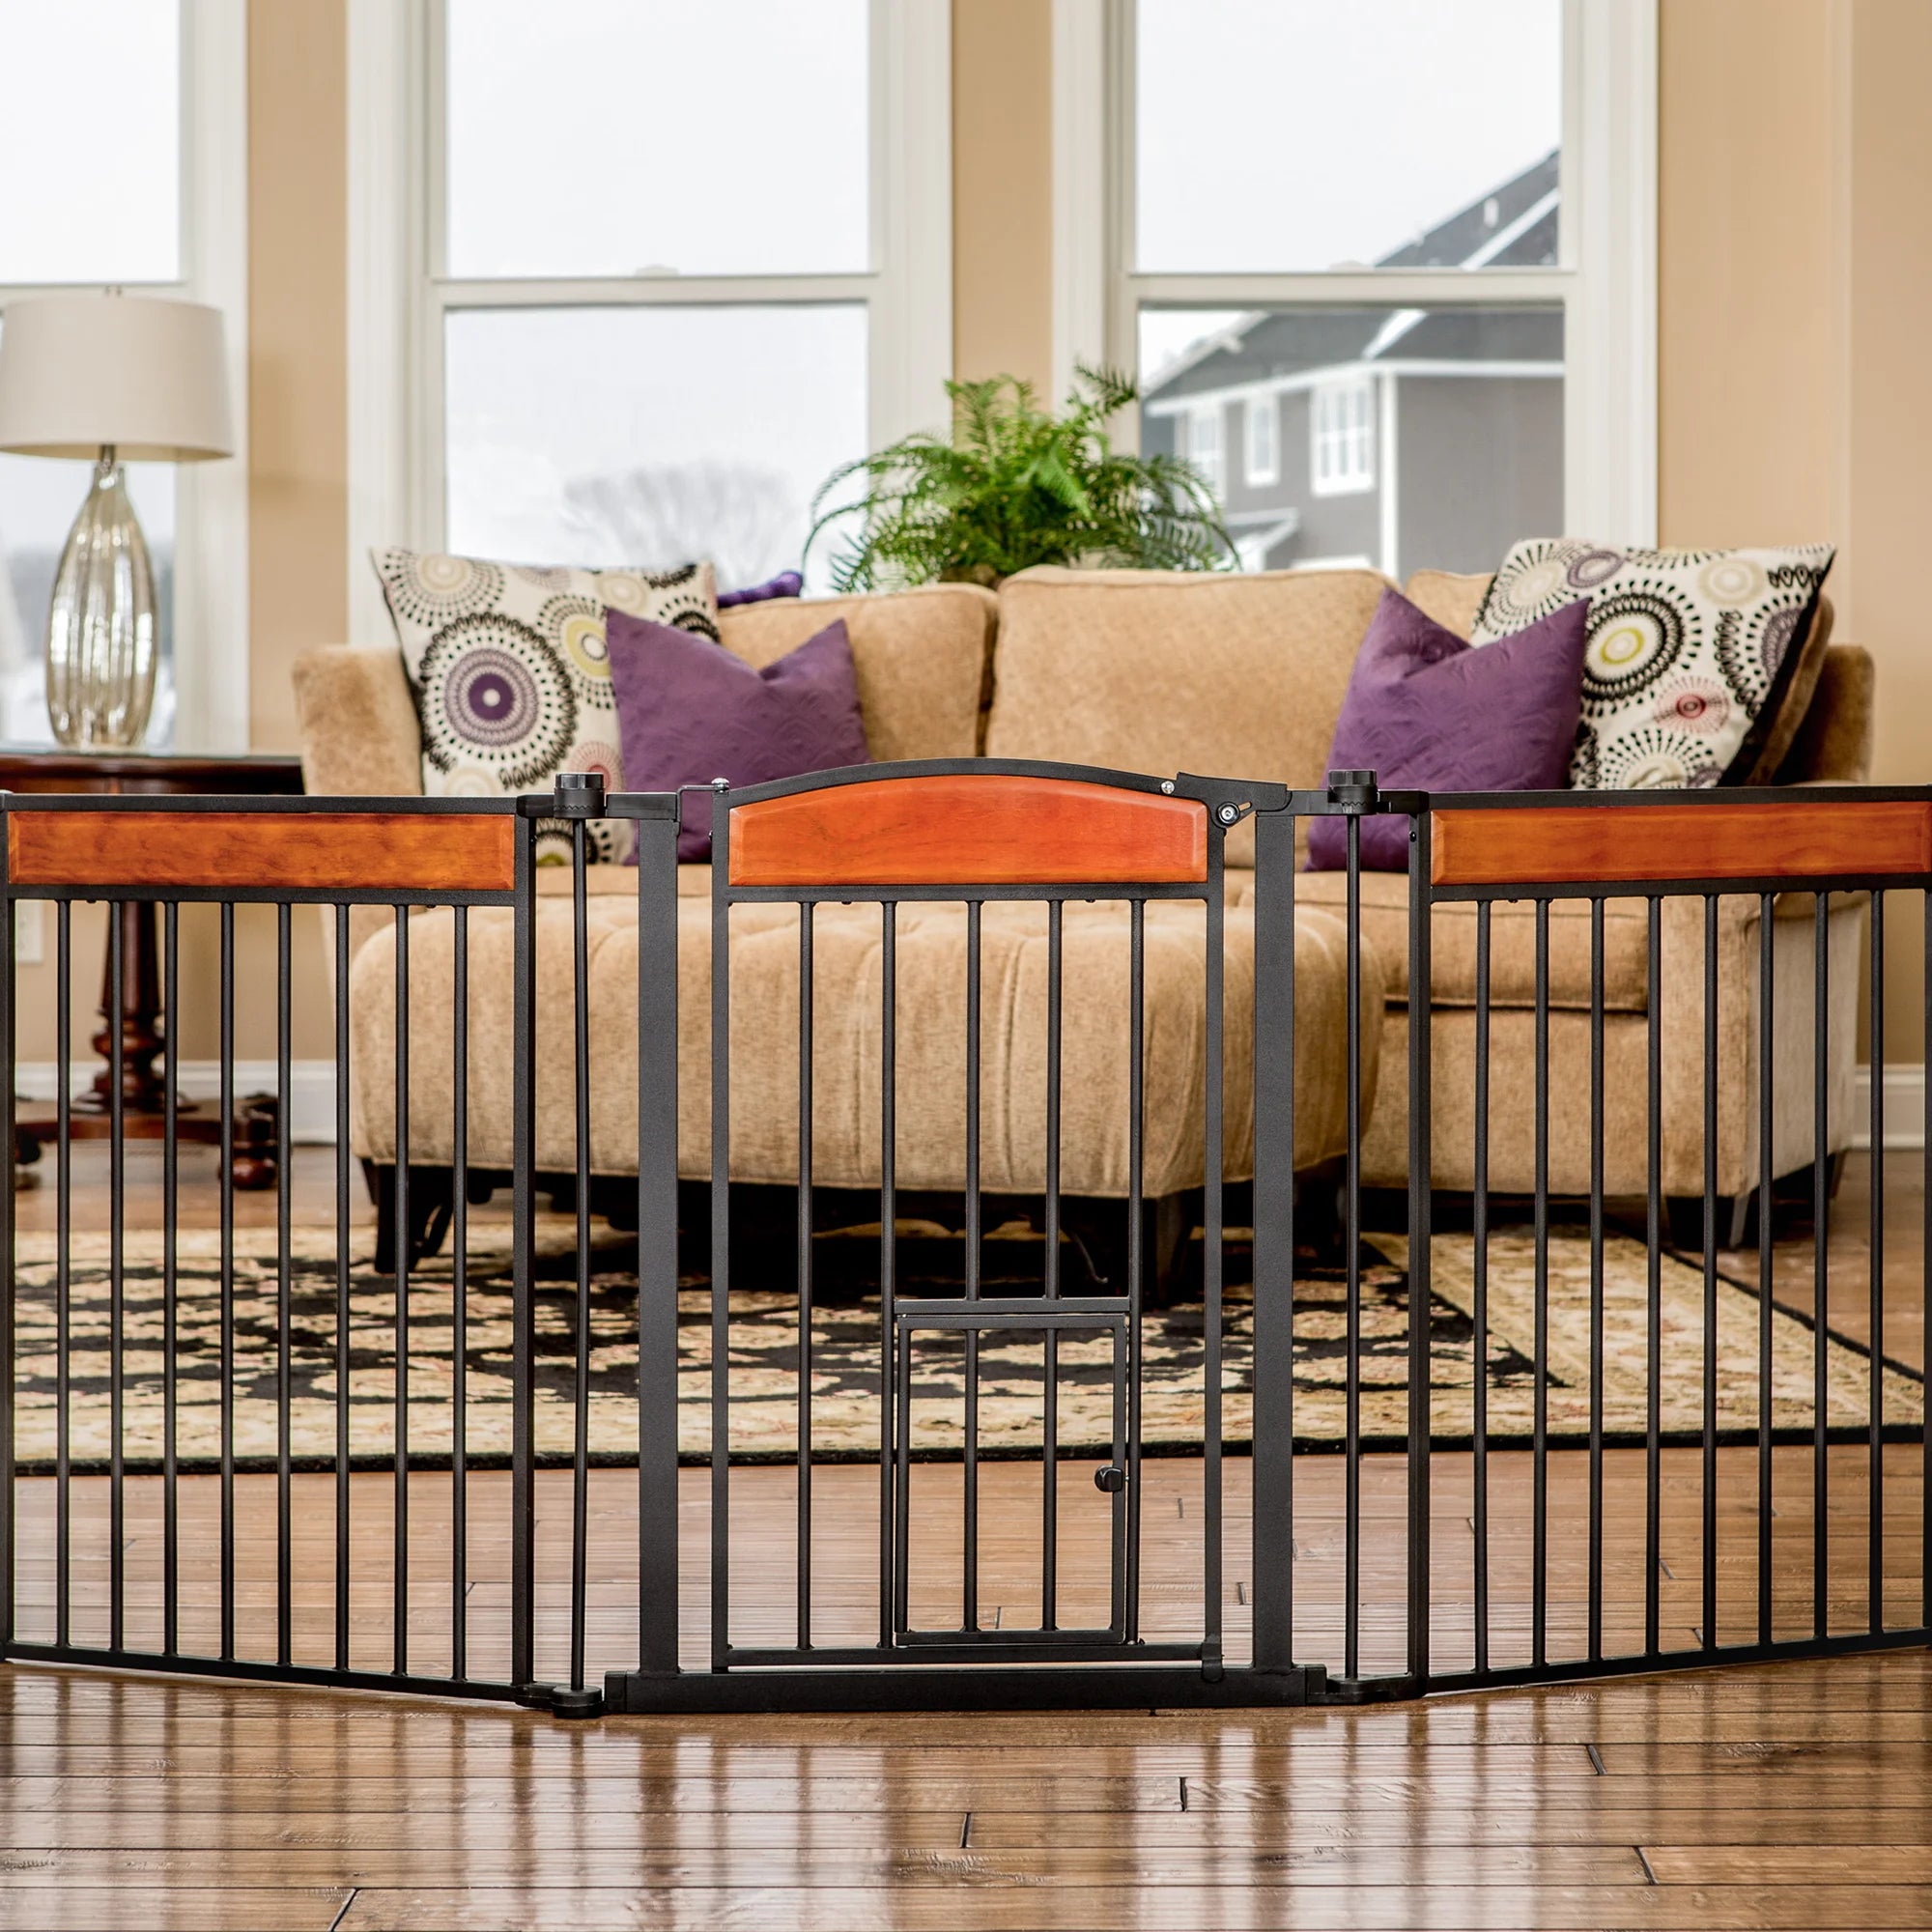 The Design Paw Flexi Walk-Thru Pet Gate in a living room.